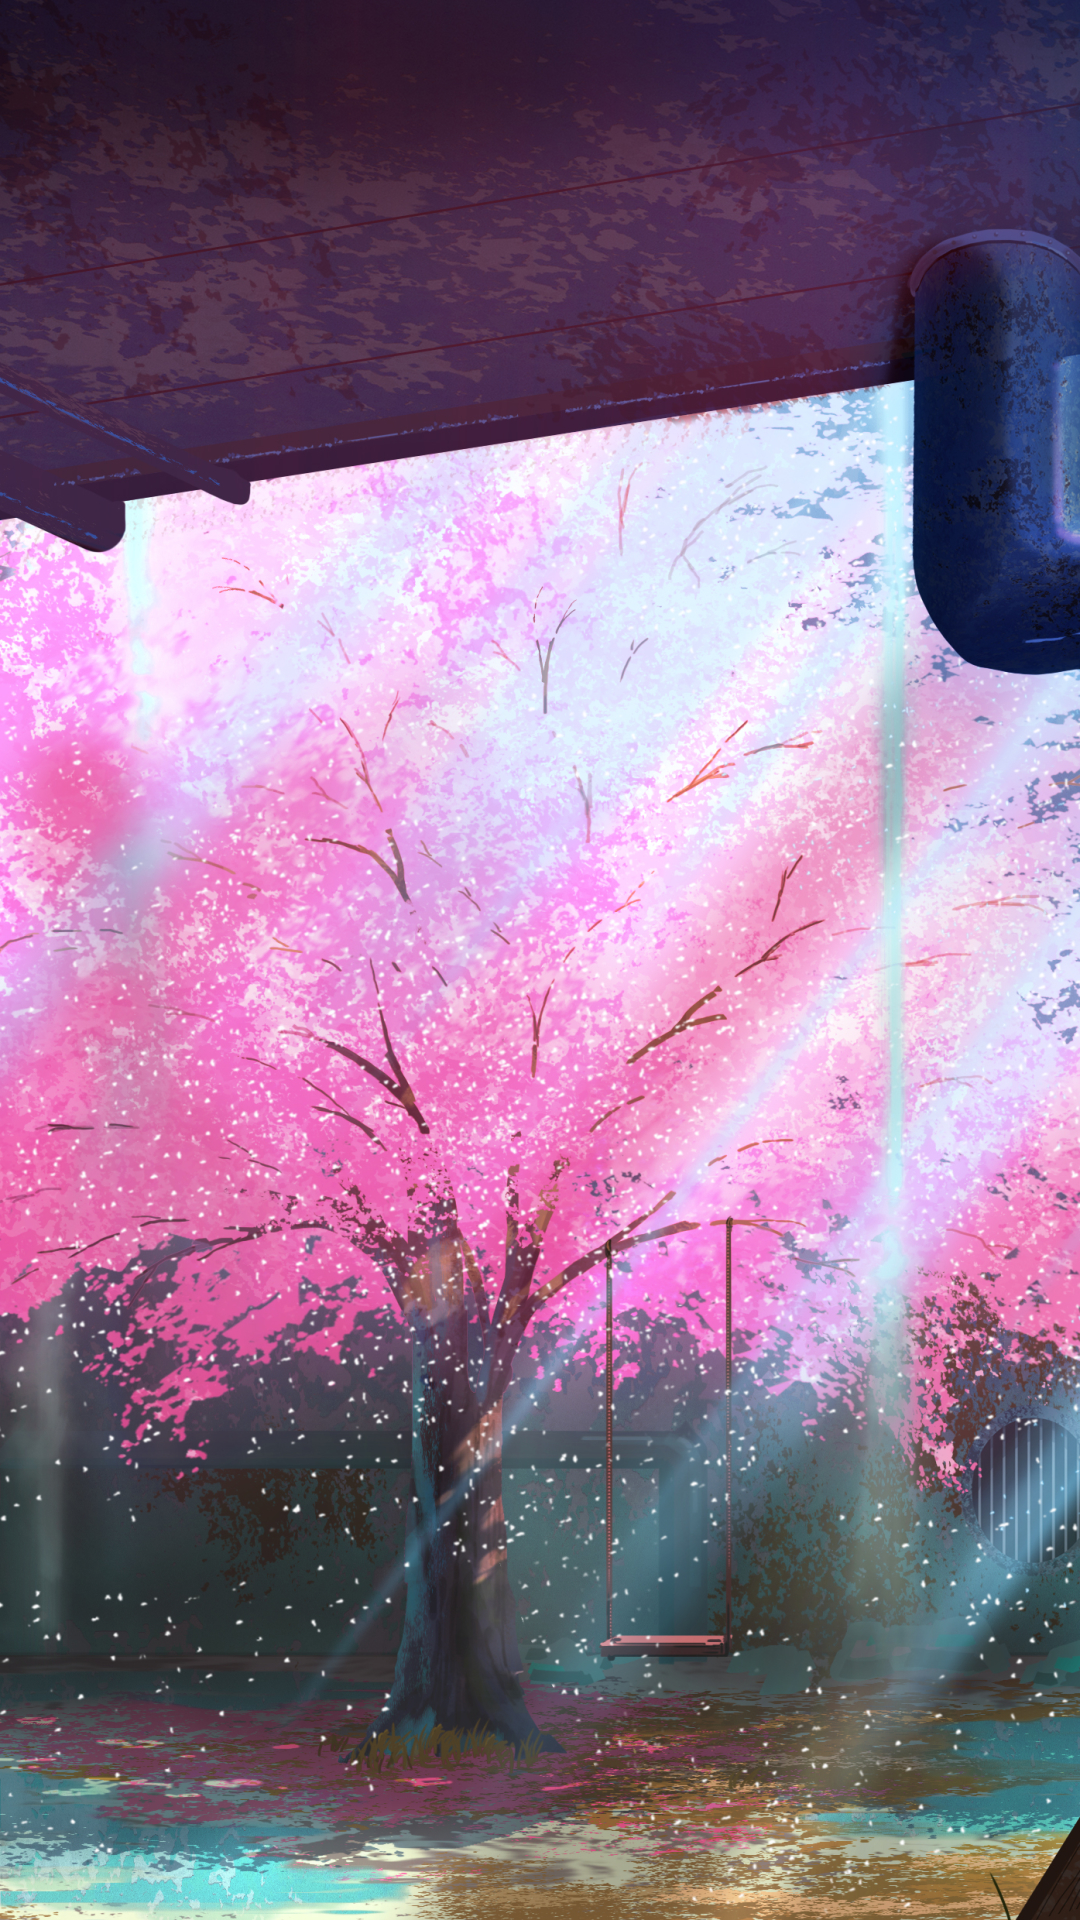 Wallpaper ID 1788945  anime musical instrument landscape 1080P sakura  tree Andy Jaramillo free download